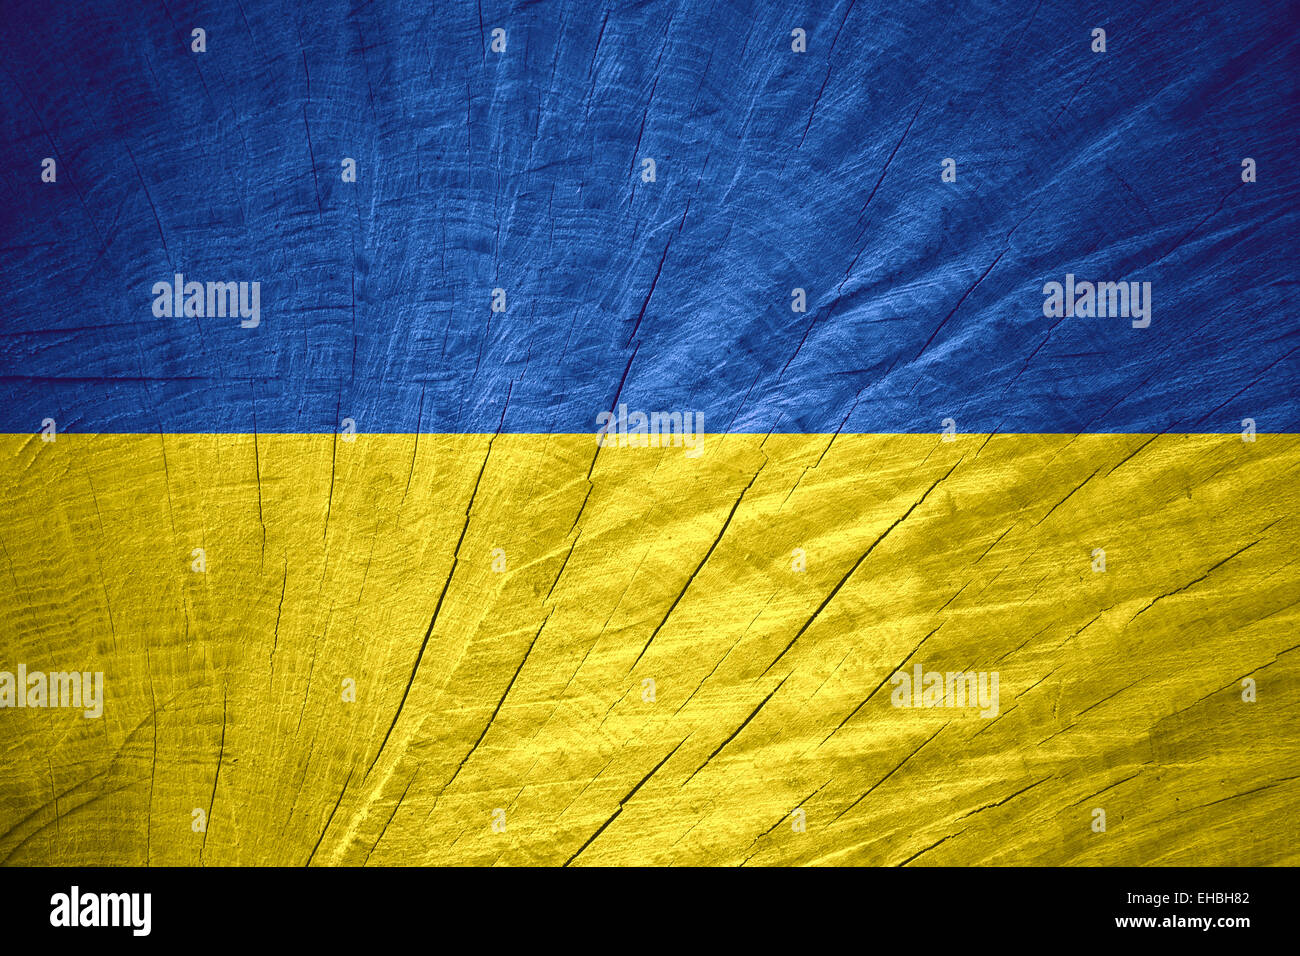 Ukraine flag or banner on wooden texture Stock Photo